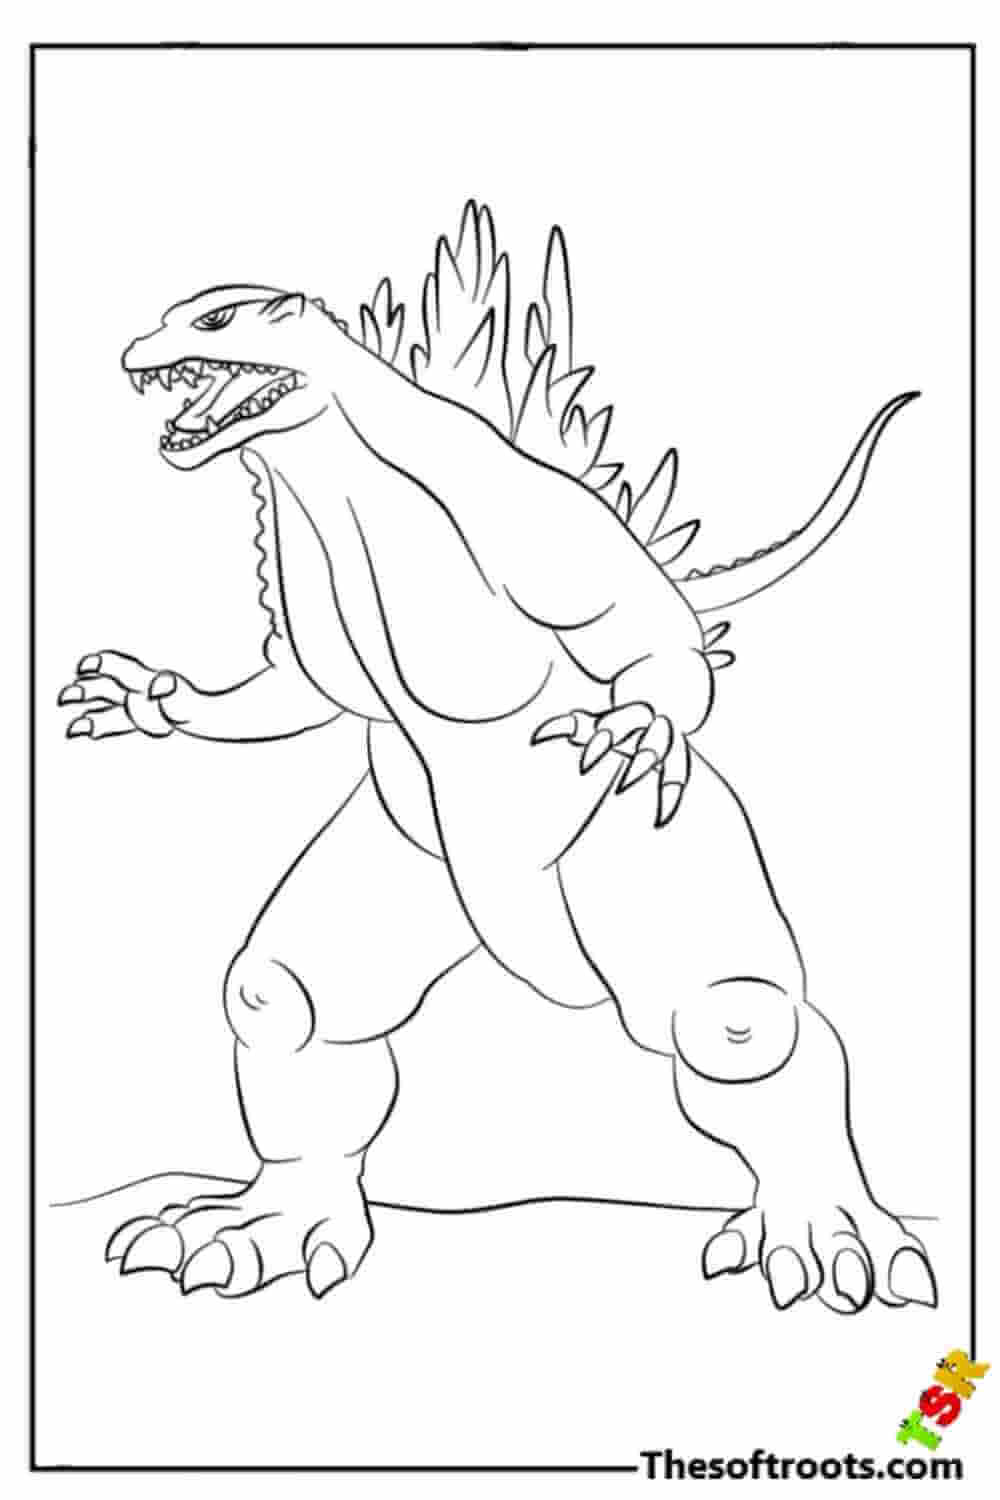 Free Godzilla coloring pages